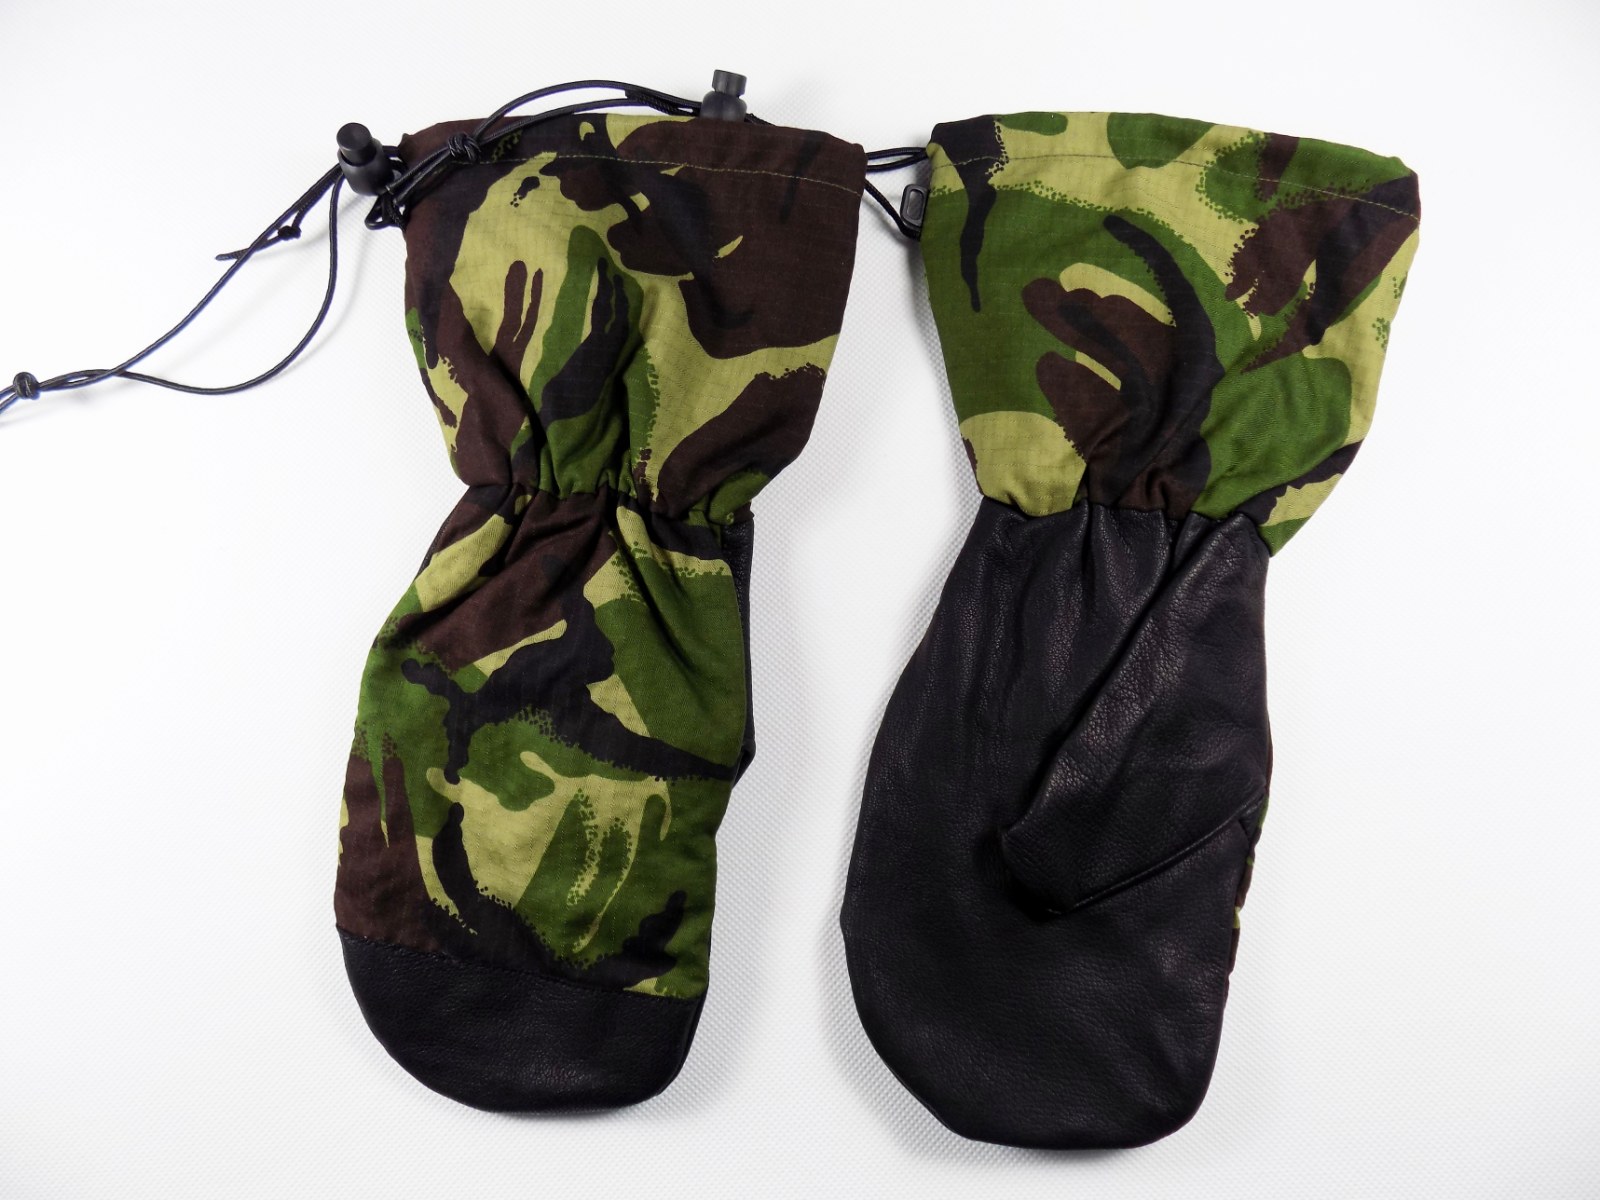 Original Professional British Army DPM Camo Pattern Winter Gloves - Brand New